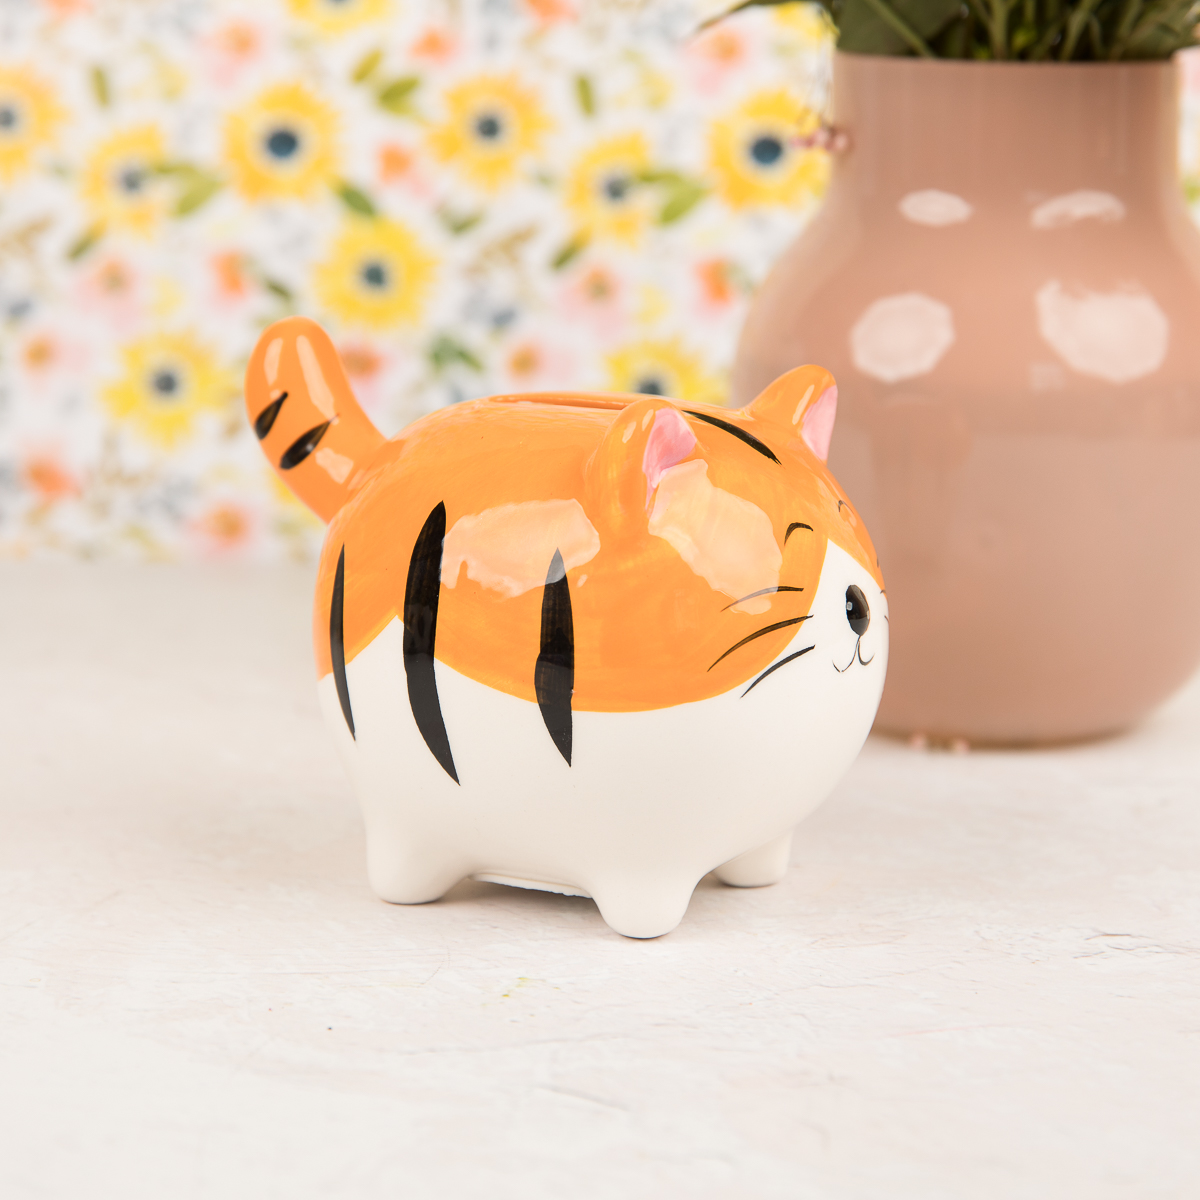 Cute Maneki Neko (Lucky Cat) Piggy Bank Made In Ceramic – Sugoii Japan Shop